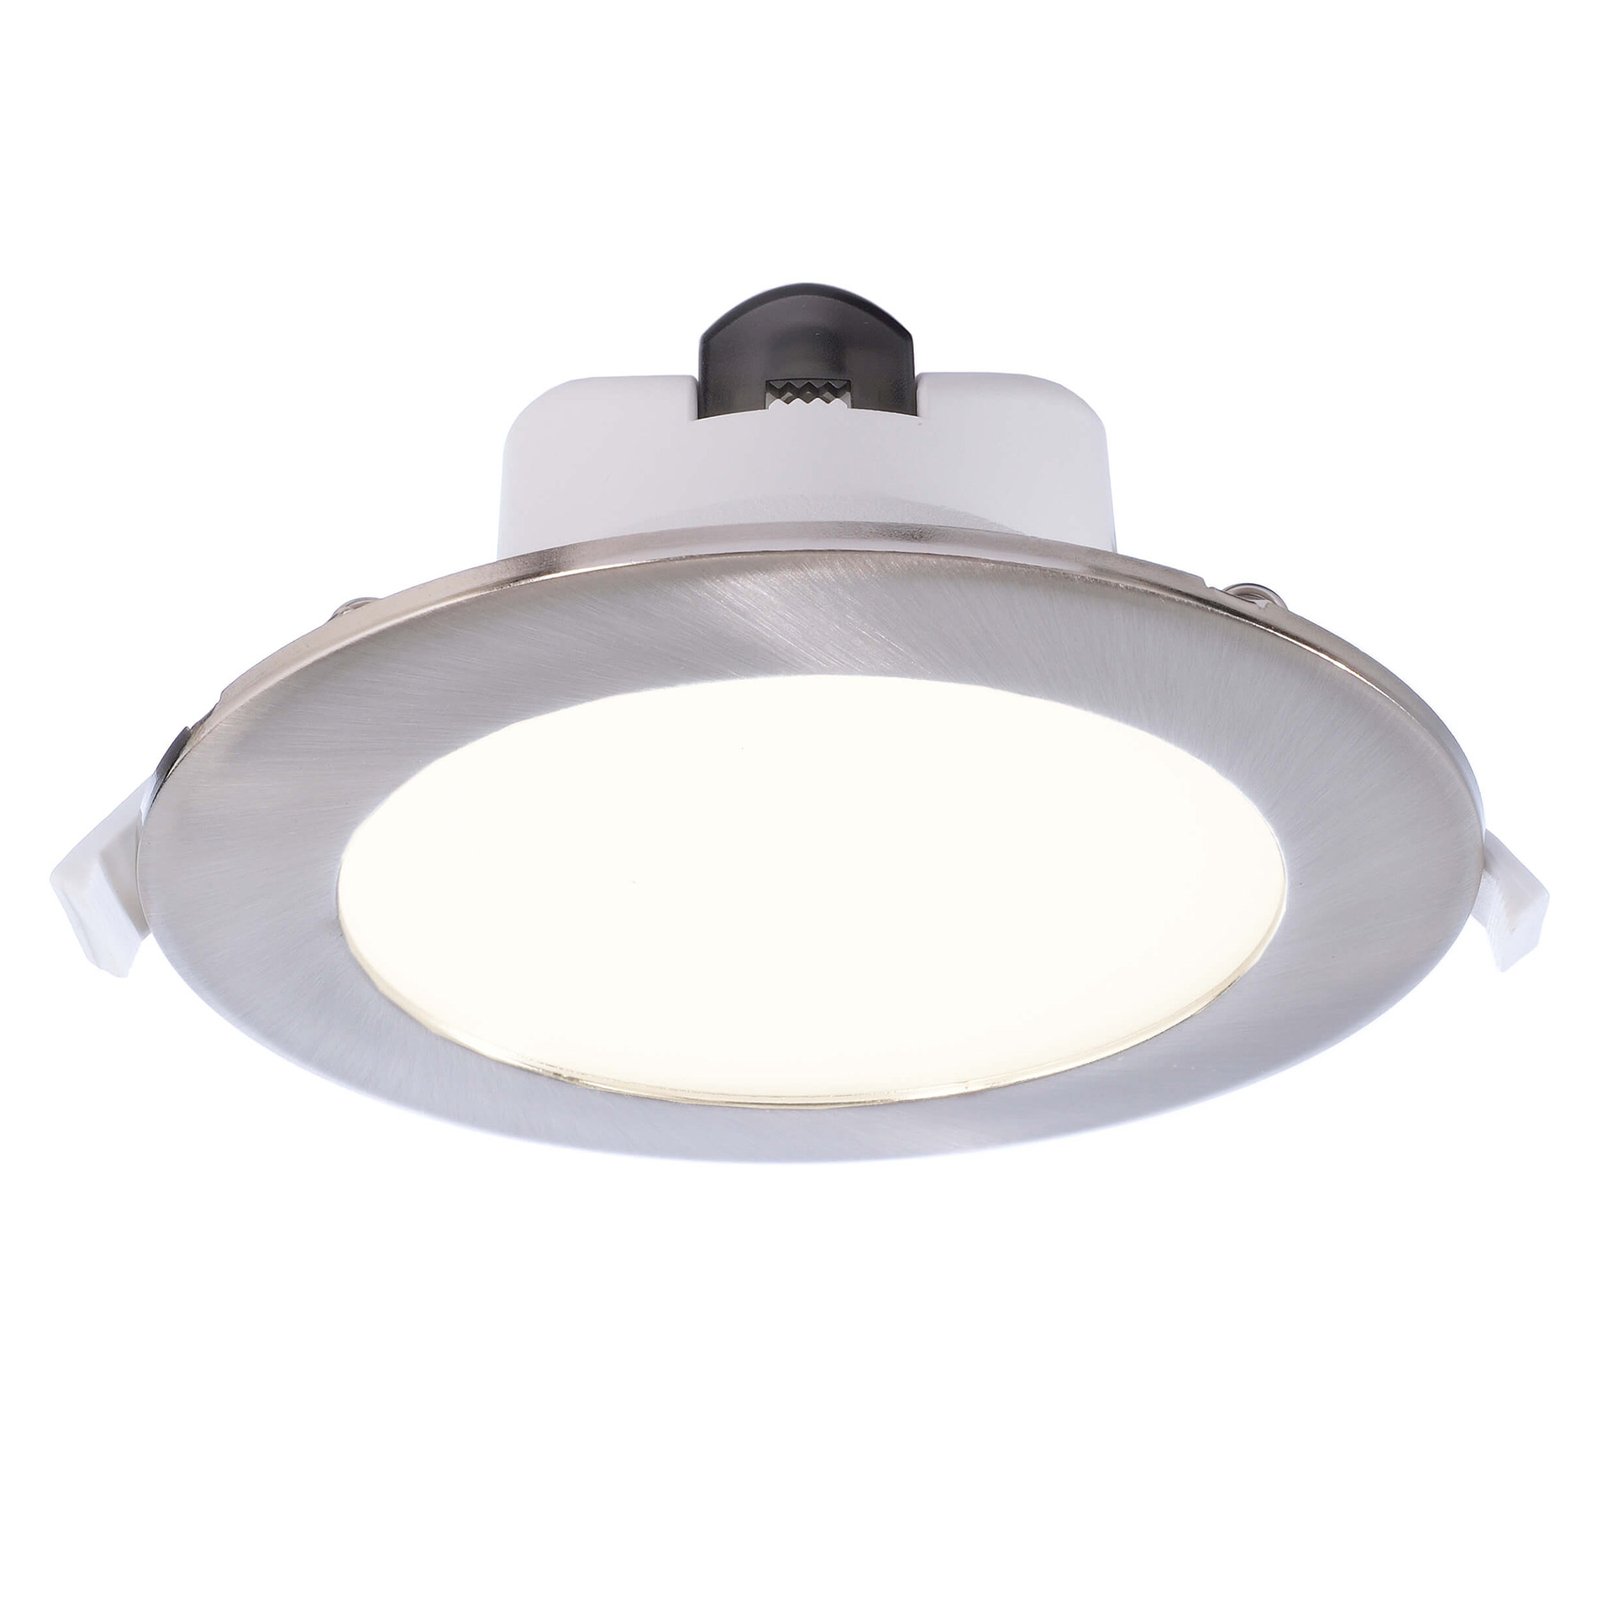 Acrux 120 LED indbygningslampe, hvid, Ø 14,5 cm